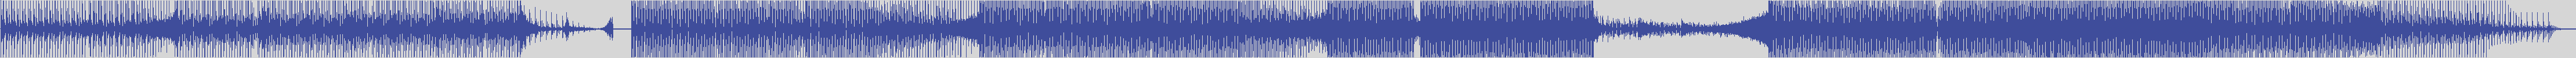 atomic_recordings [AR020] Alex Di Stefano - Mind The Gap [Original Mix] audio wave form